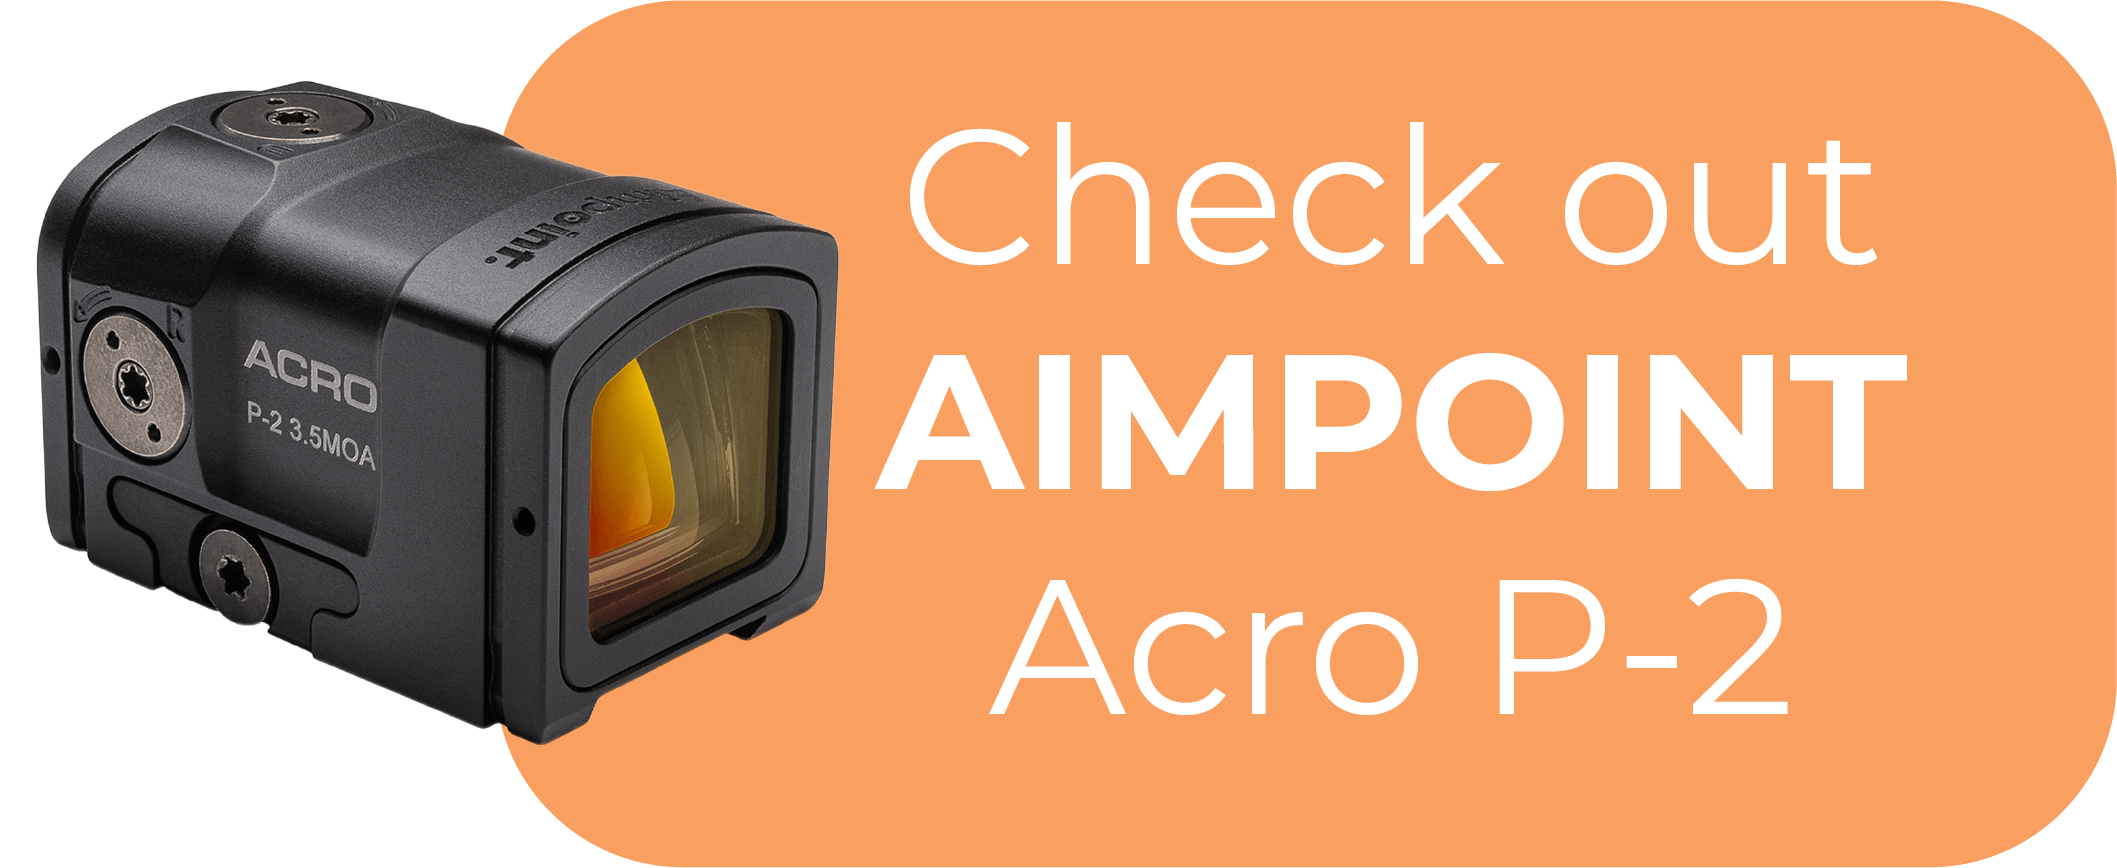 Aimpoint Acro P-2 Footprint